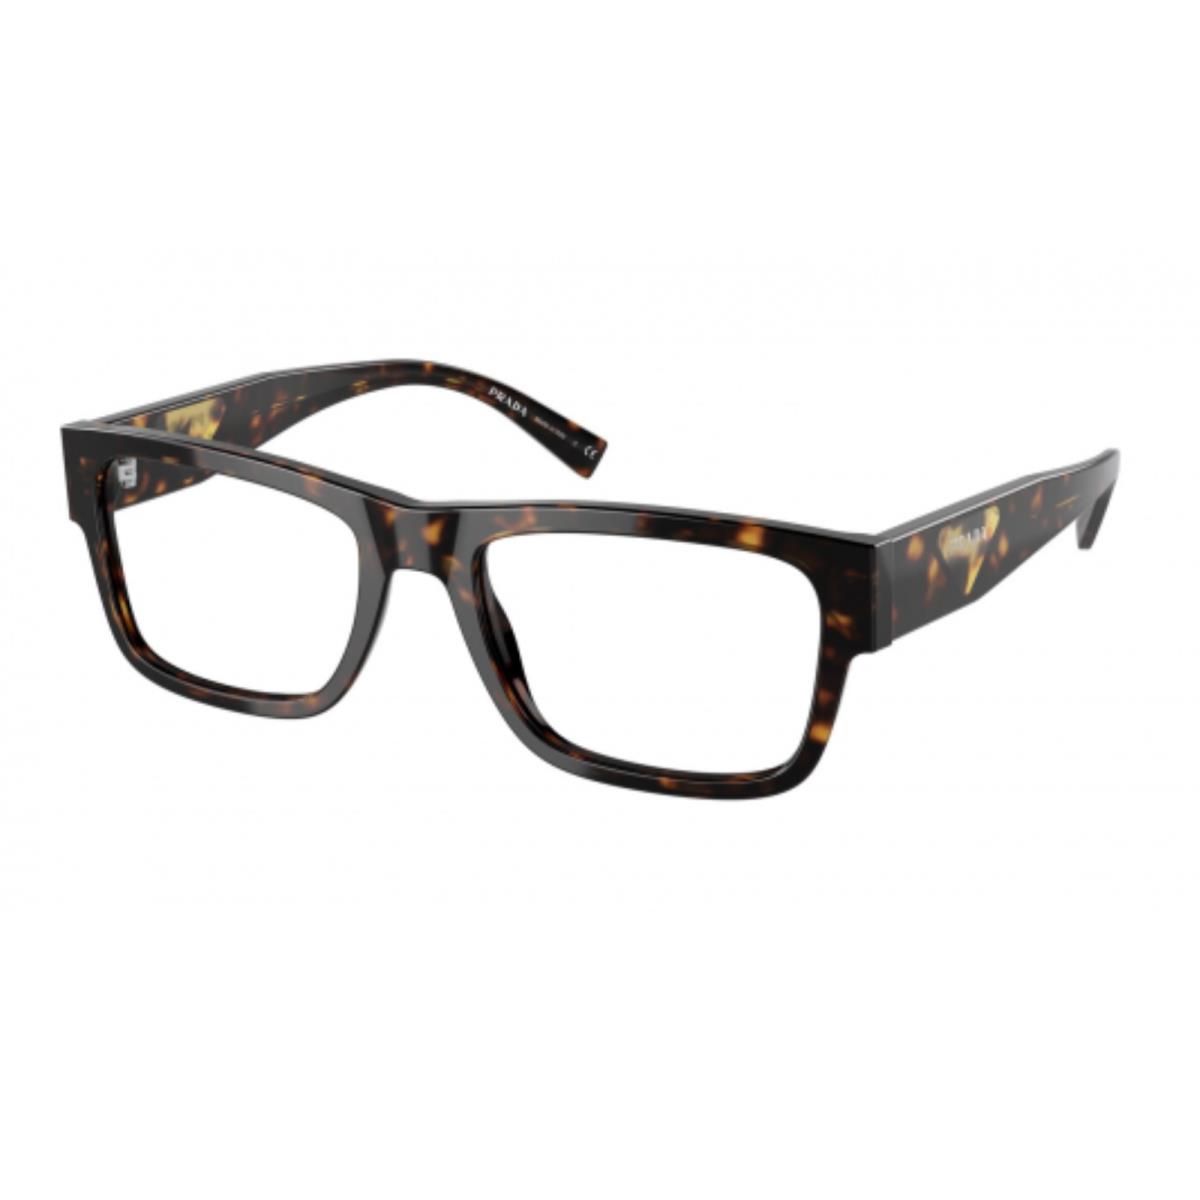 Prada Eyeglasses Vpr 15Y 2AU-1O1 54-19 145 Large Havana Tortoise Frames - Frame: